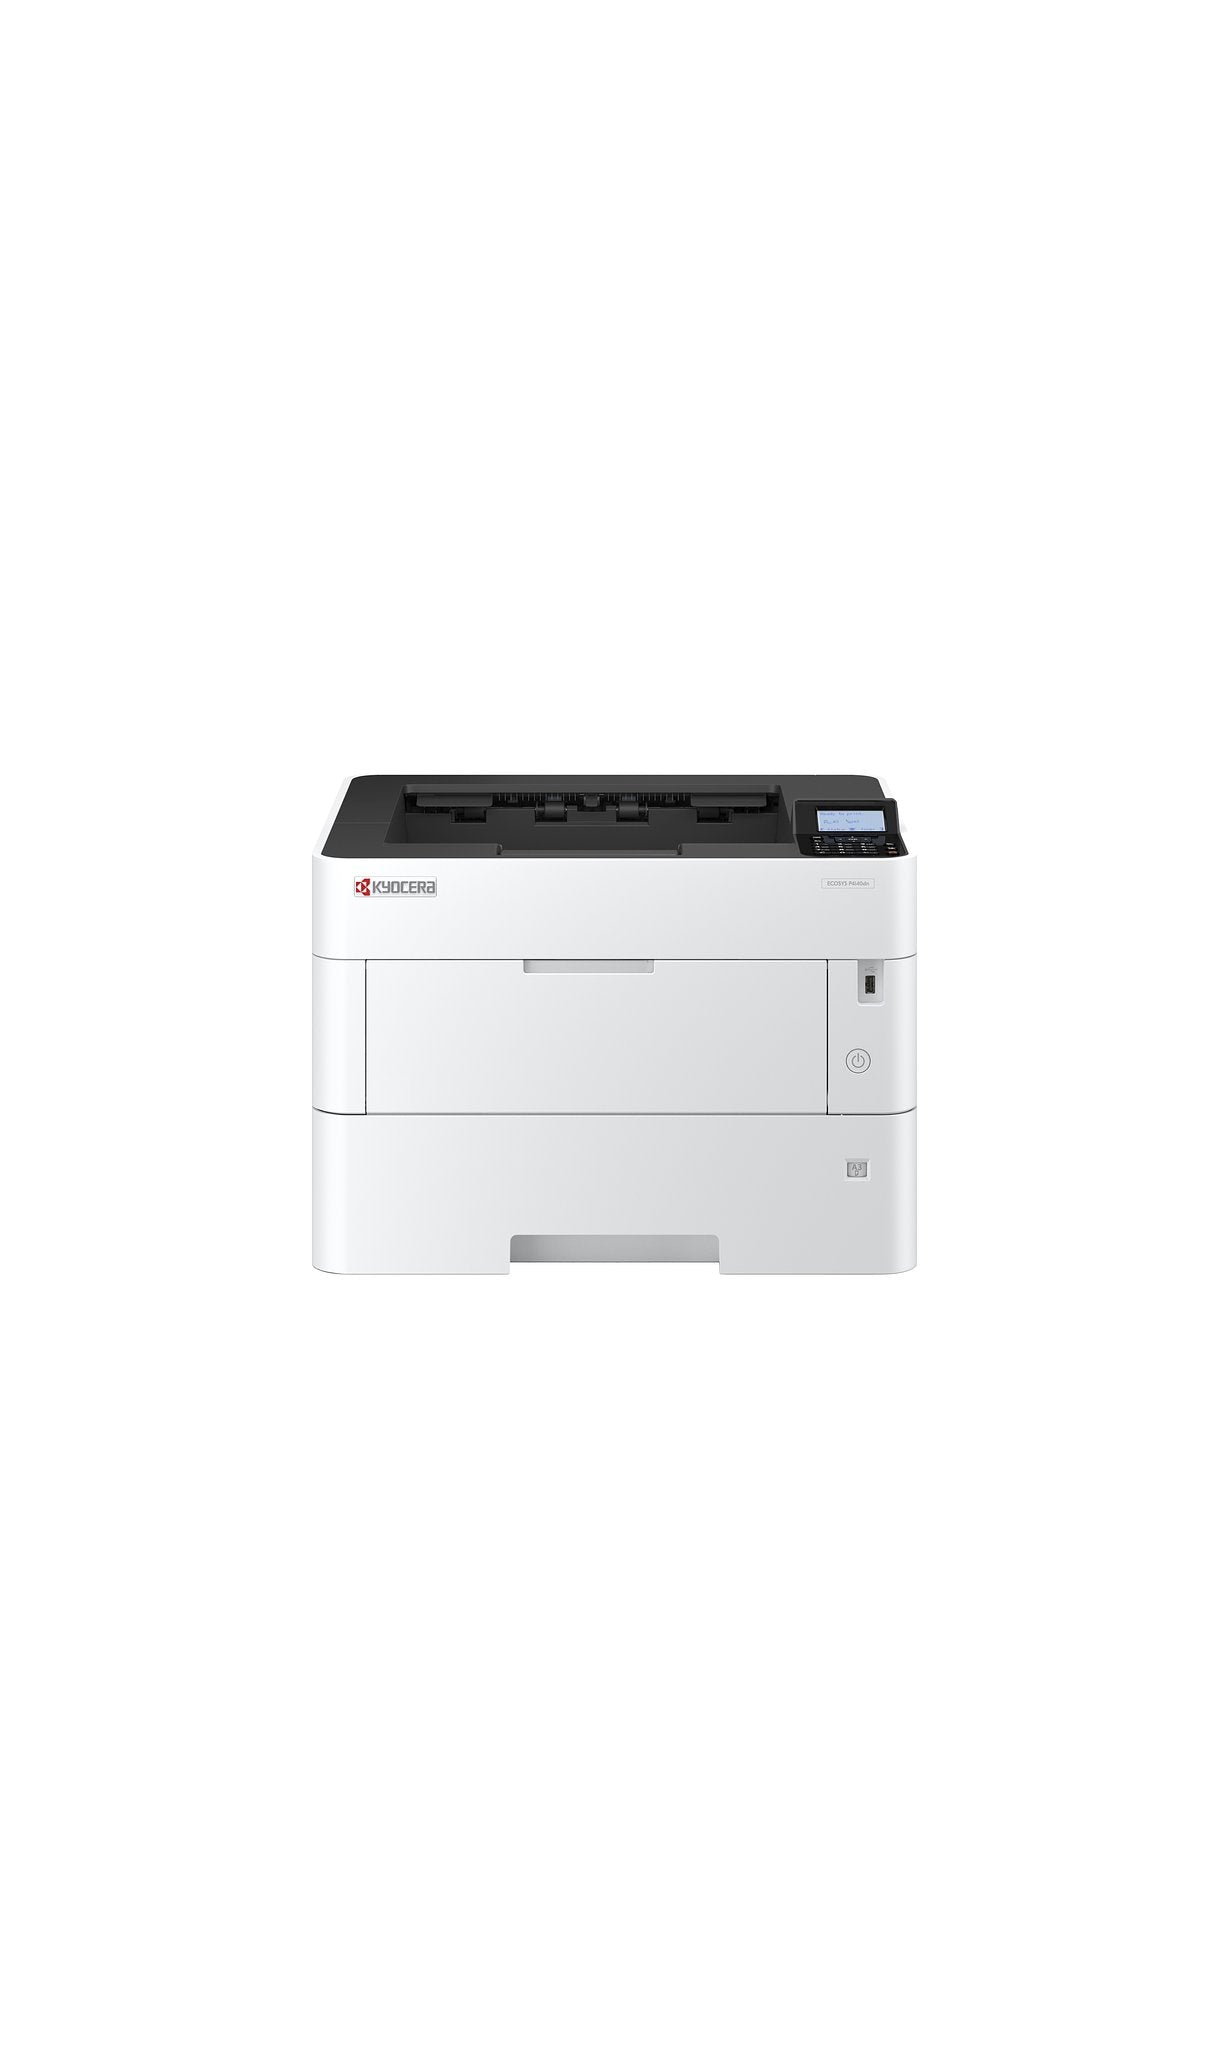 Kyocera ECOSYS P4140dn -  Laserprinter A4 - Zwart-wit - 410x477x343mm